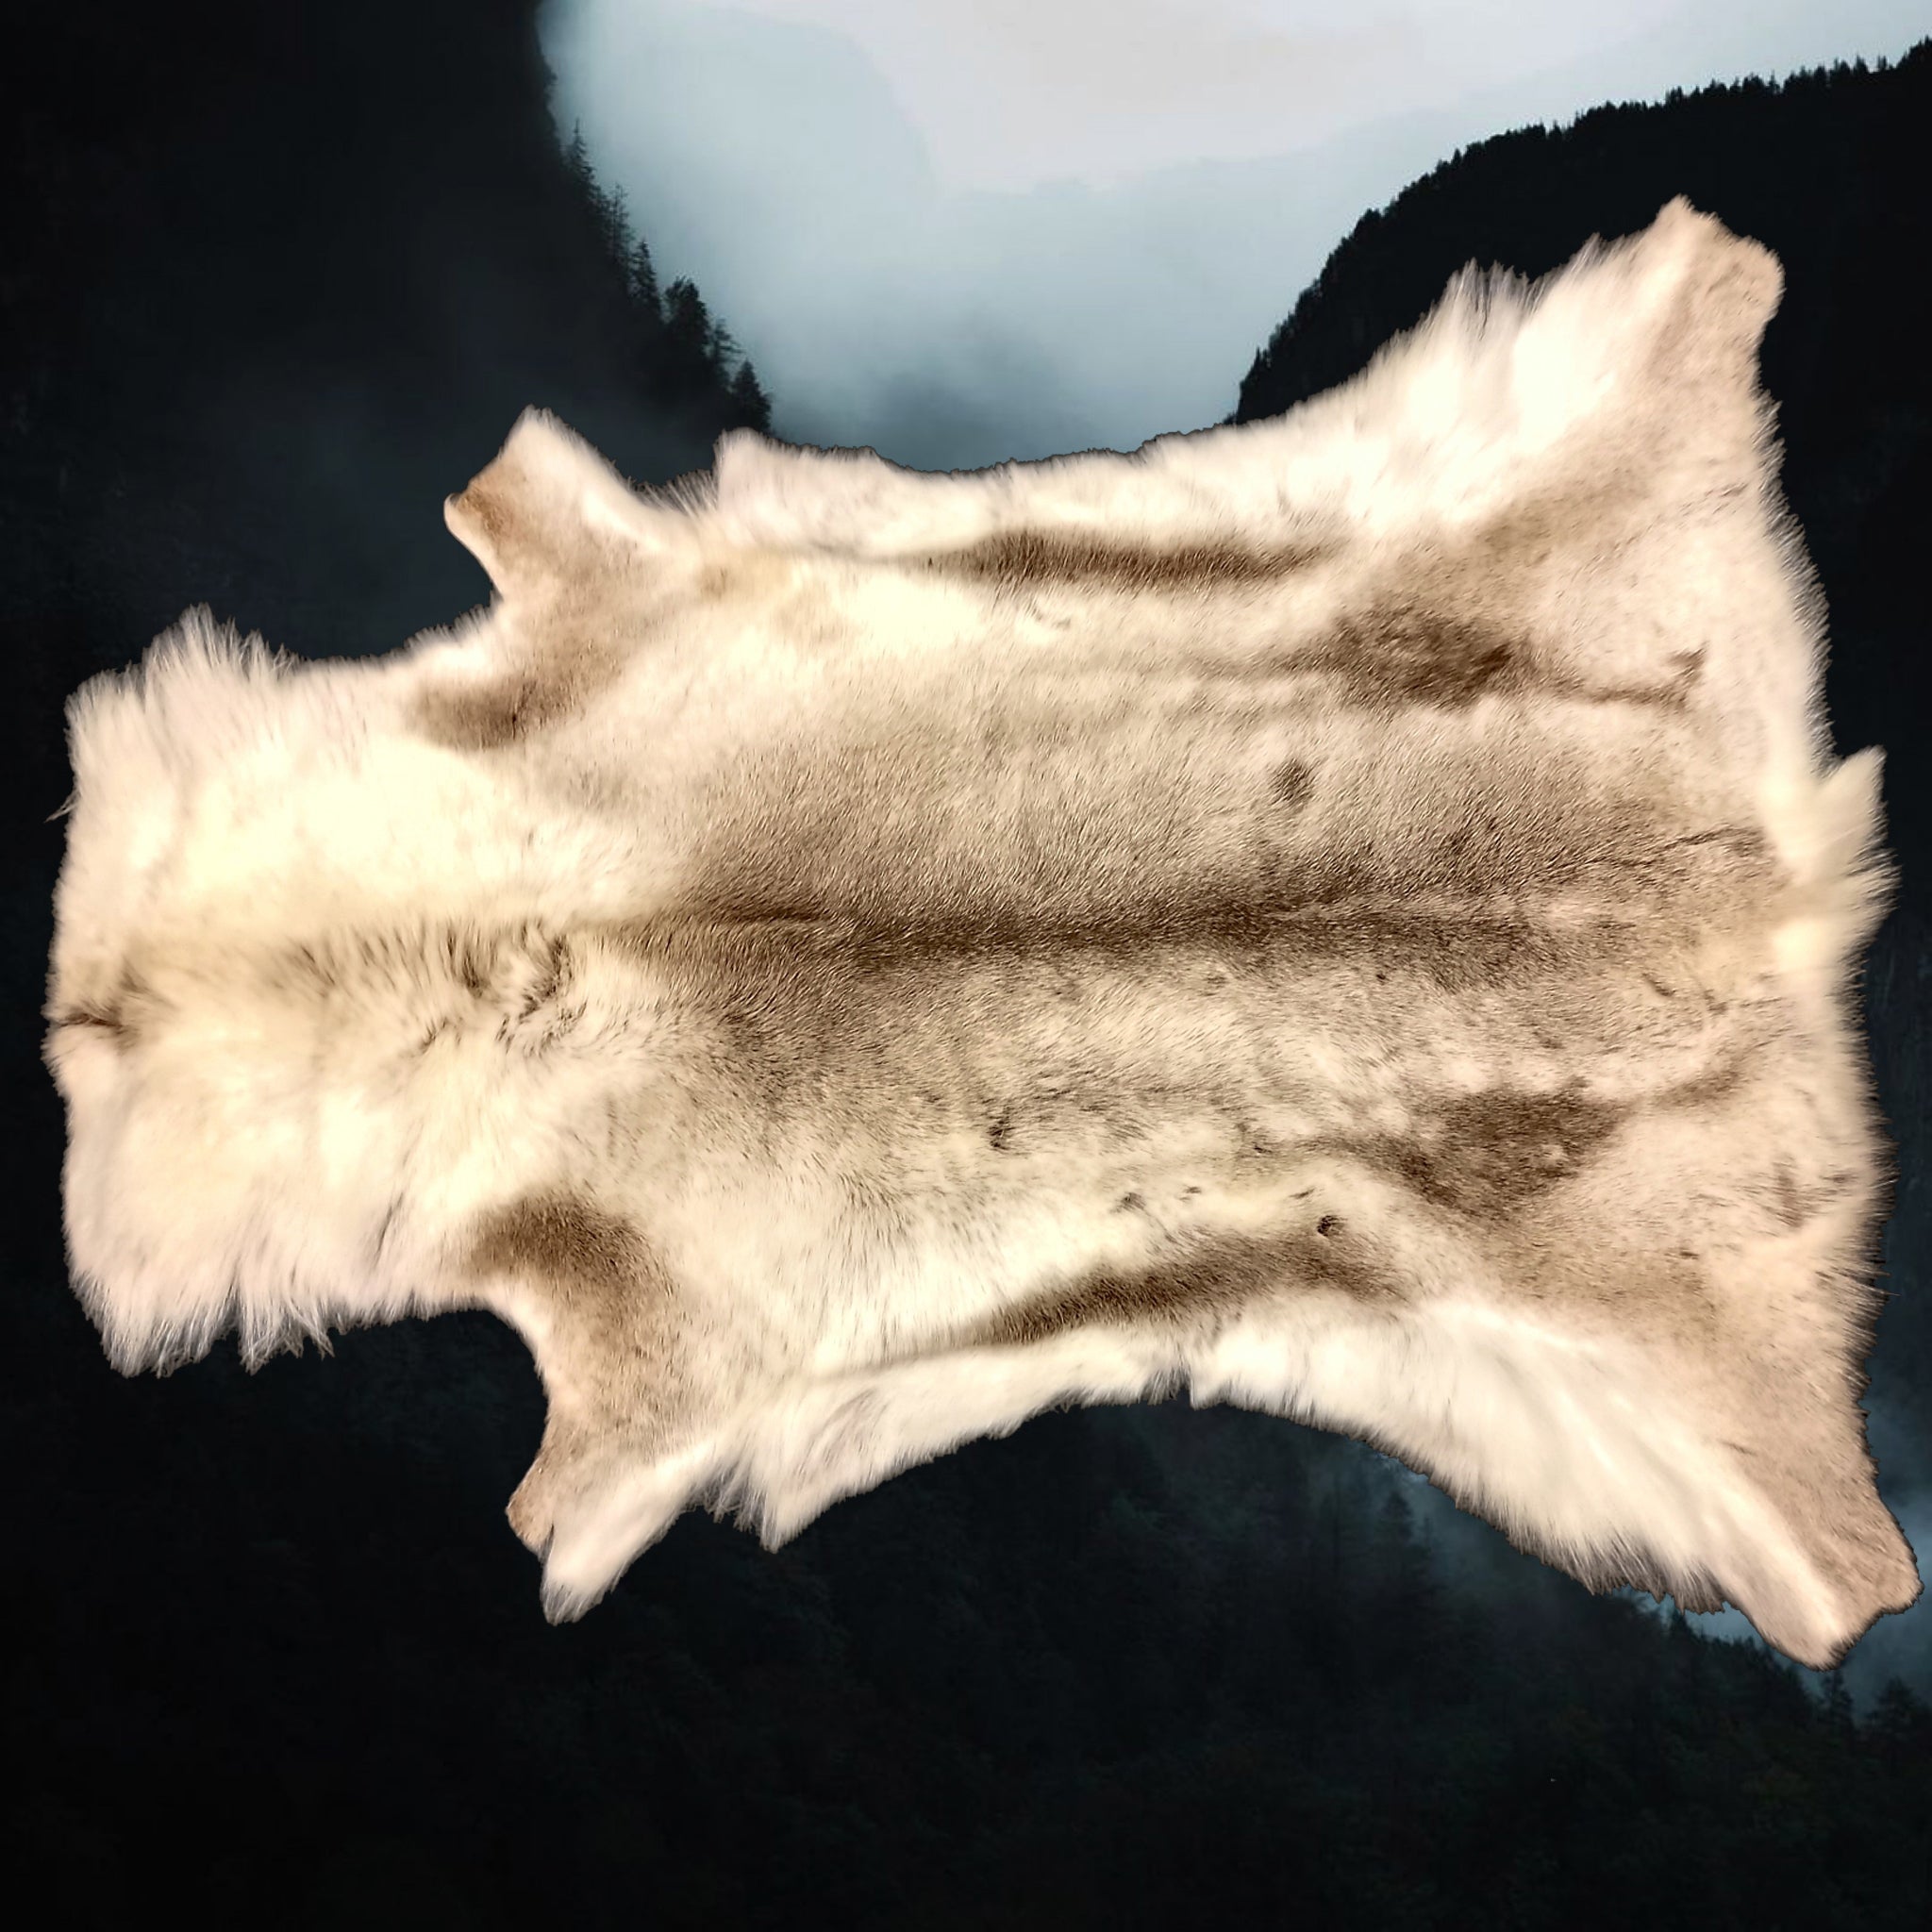 Full Light reindeer hide from Lappland - Animal Skins